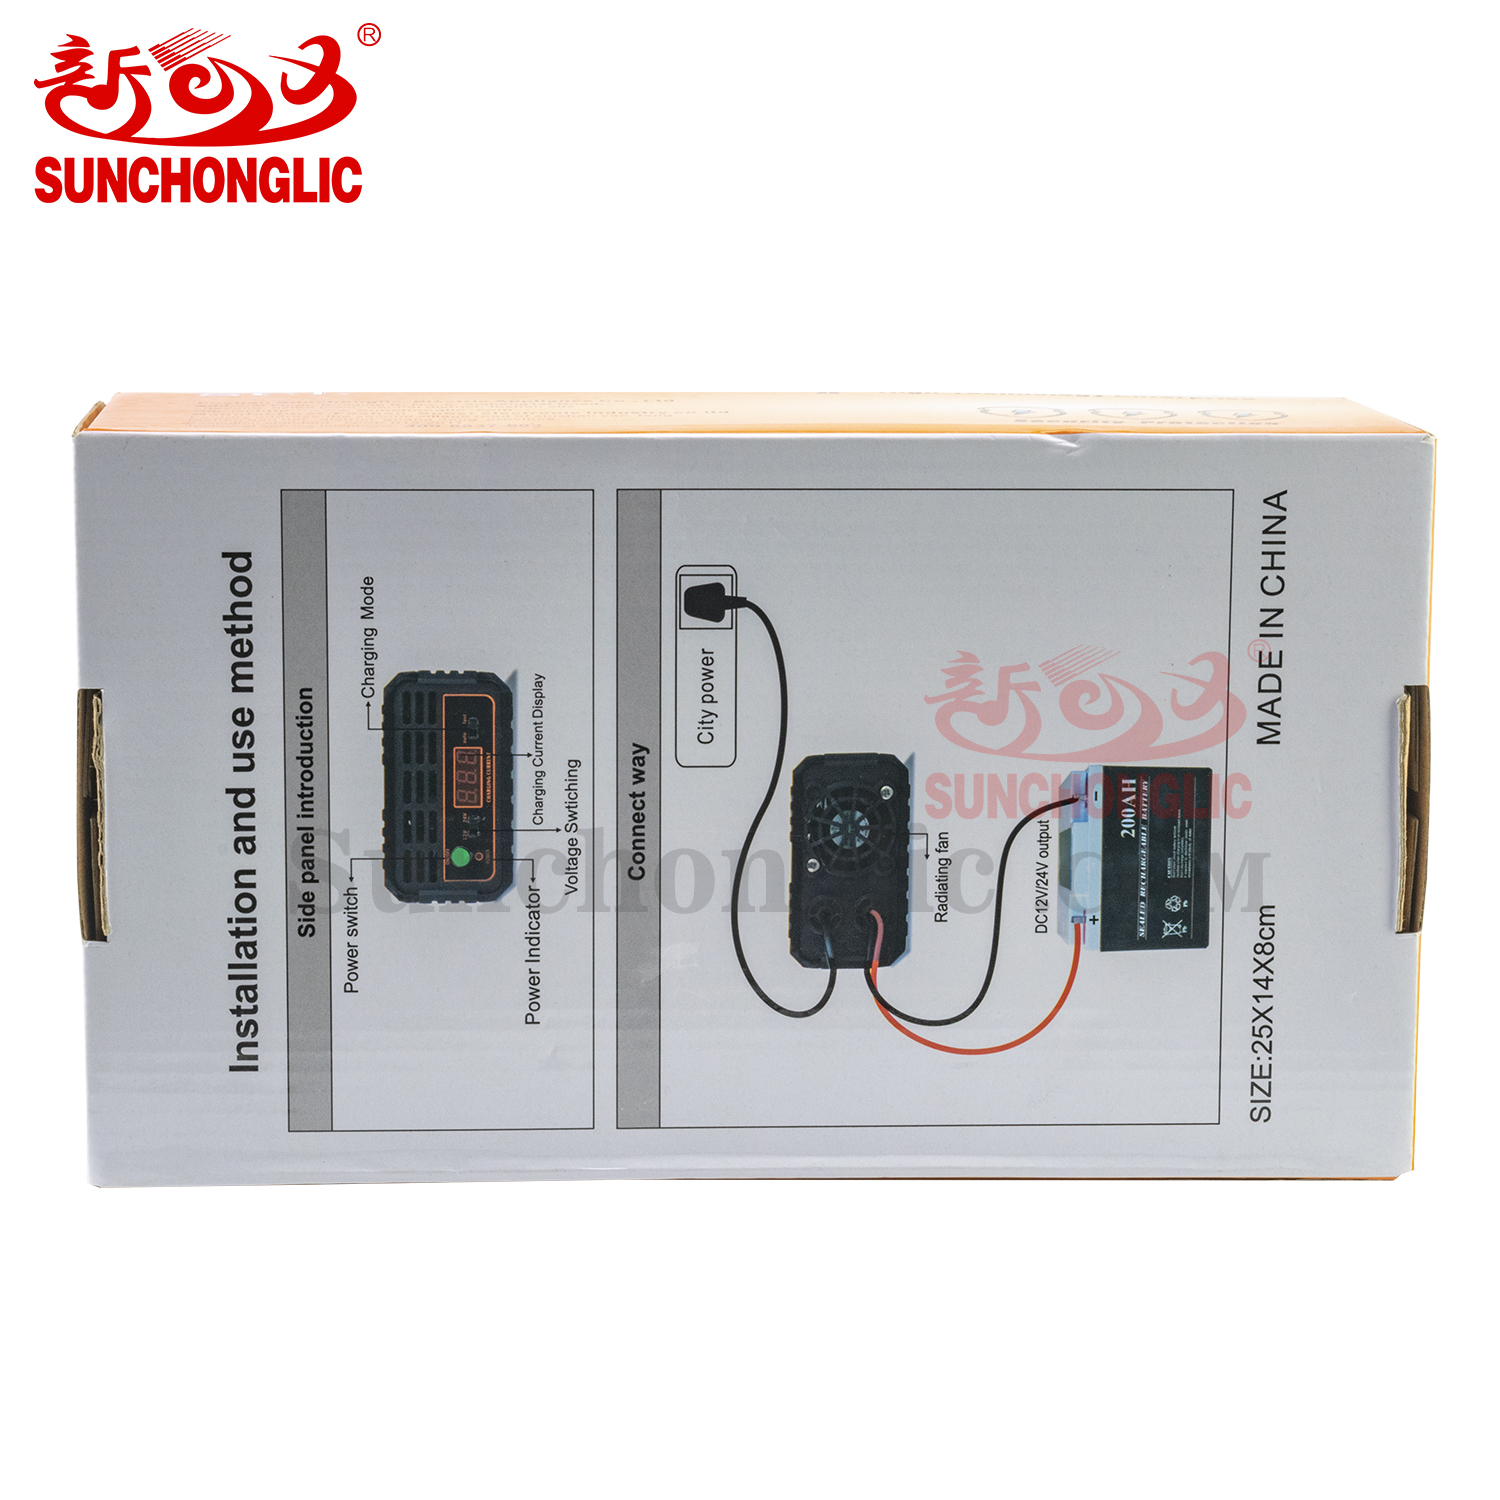 FON-1206Y - AGM/GEL Battery Charger - Foshan Sunchonglic Electric